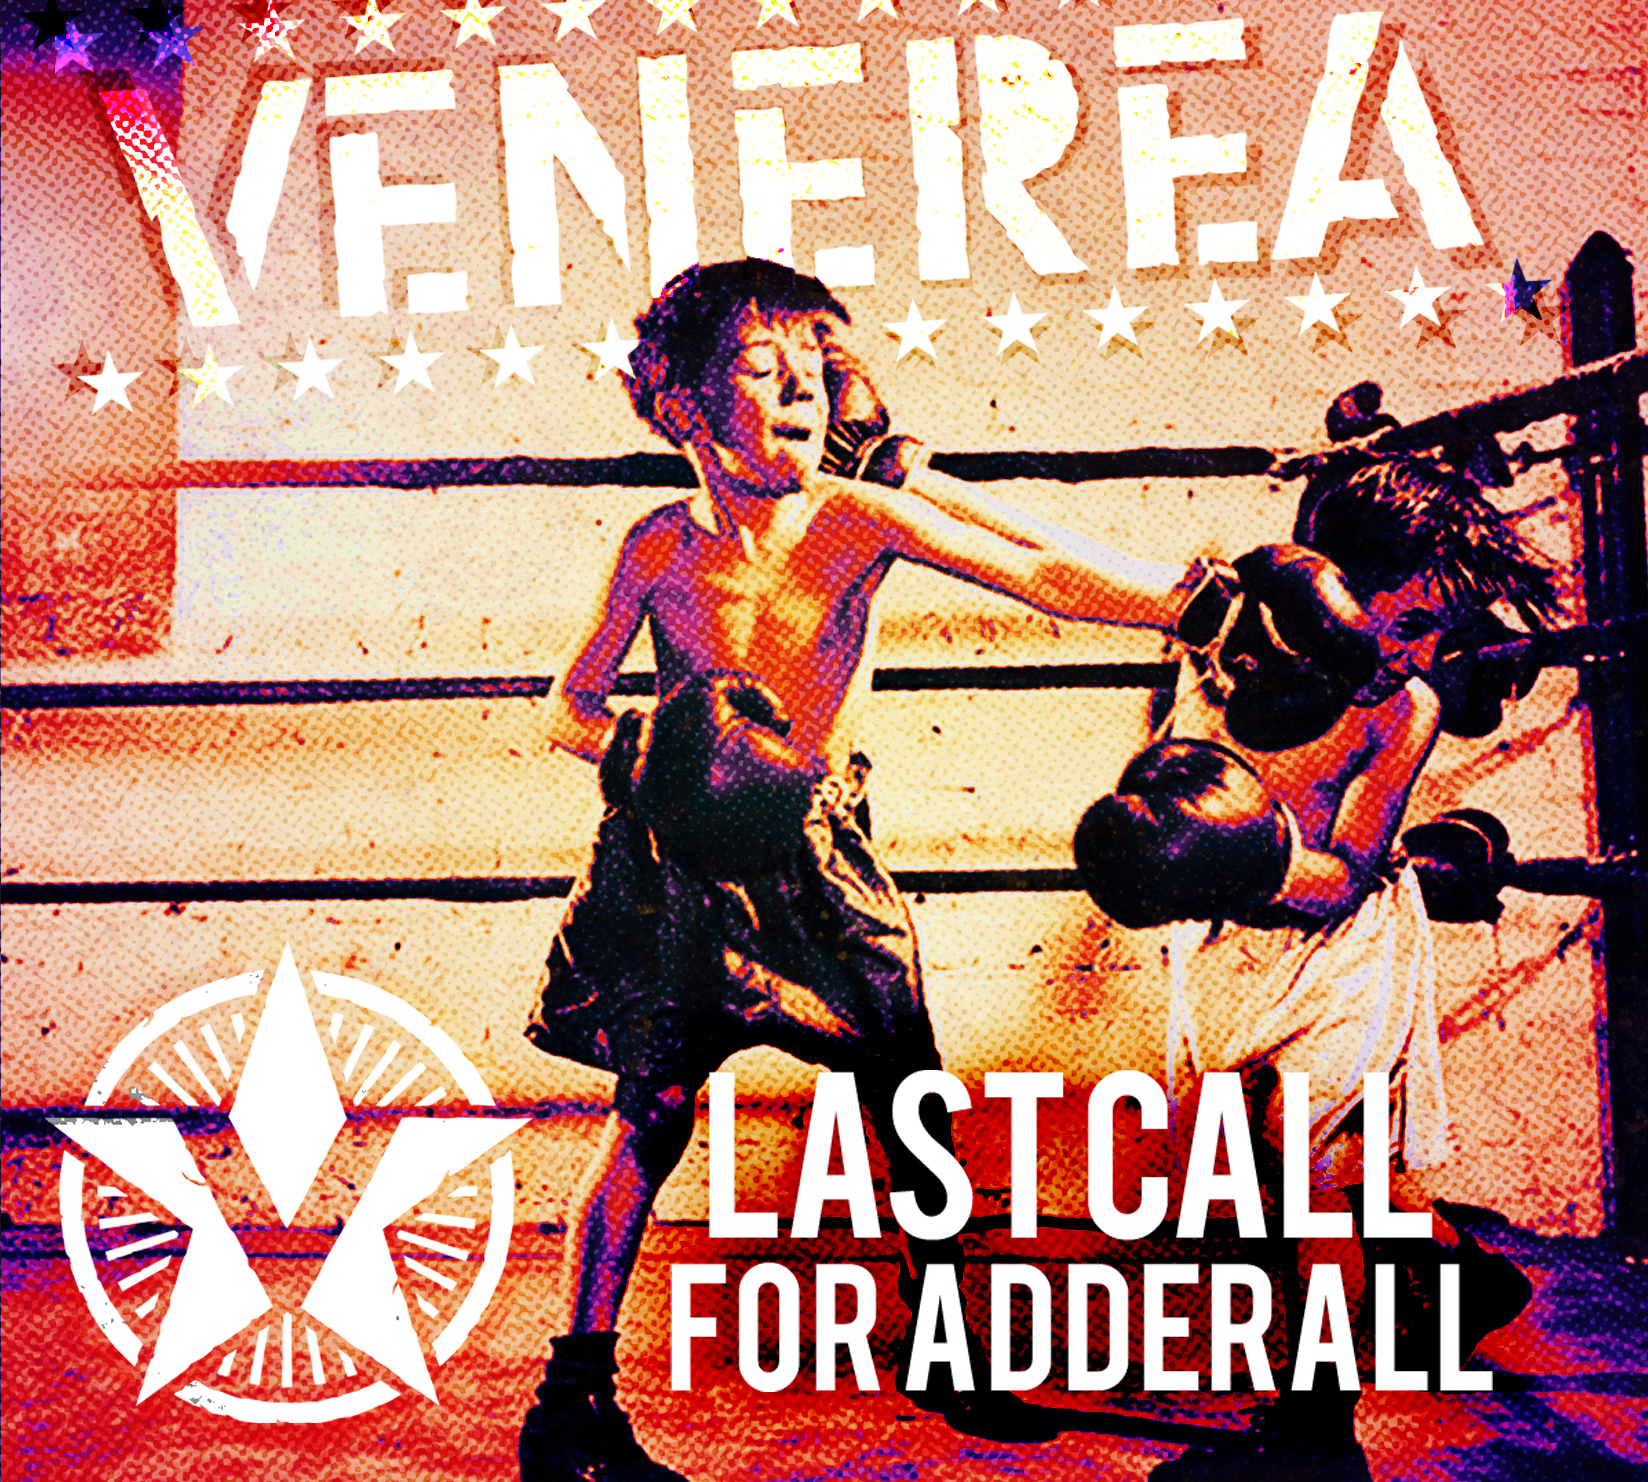 Venerea - Last Call for Adderall